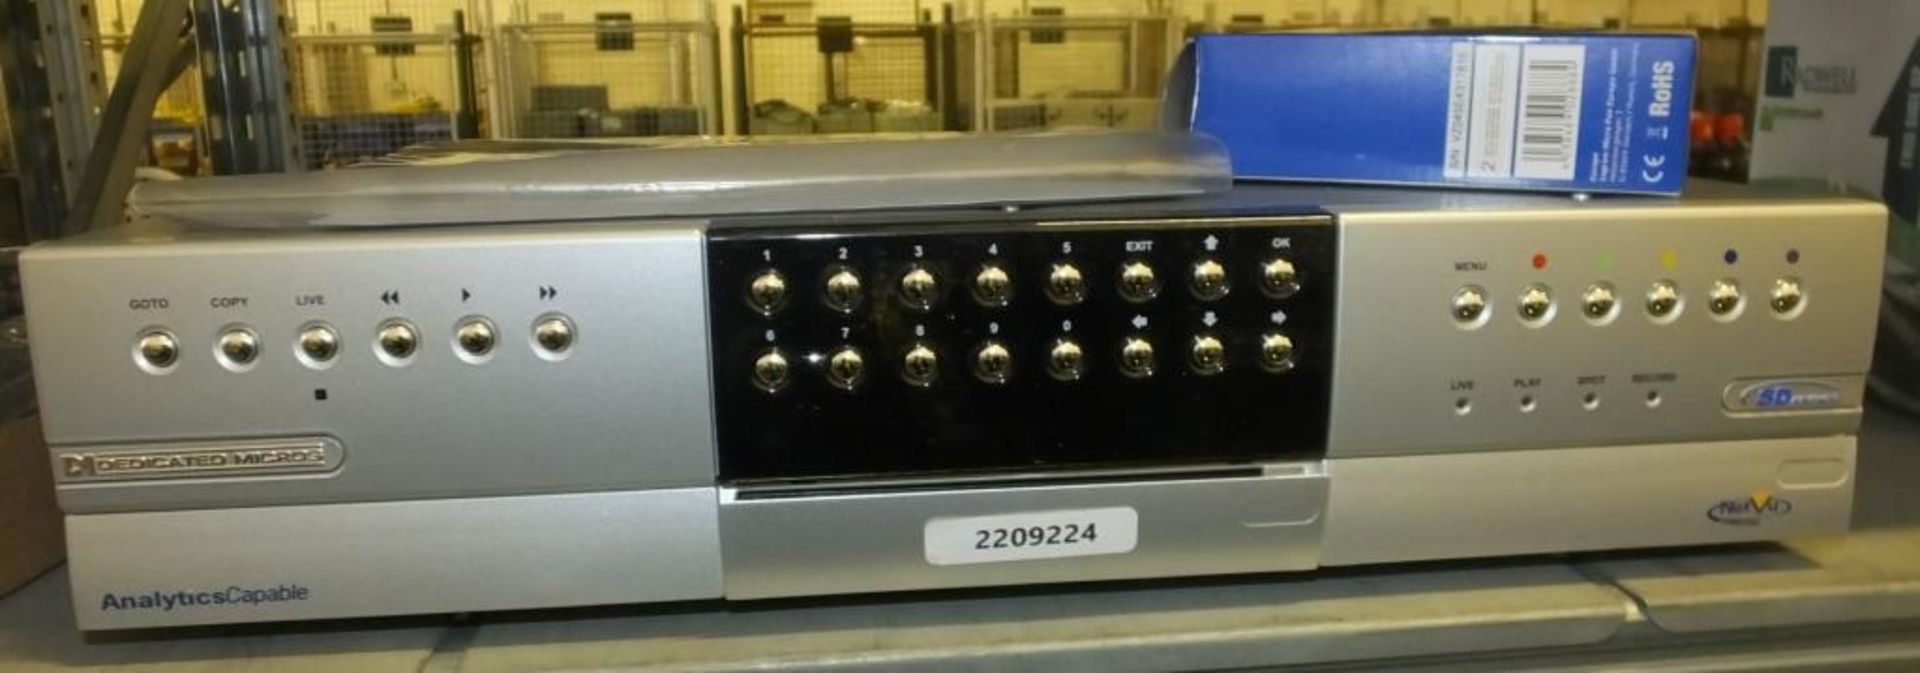 Dedicated Micros SD Advanced Hybrid 16Ch 3TB Looping Unit - Image 3 of 3